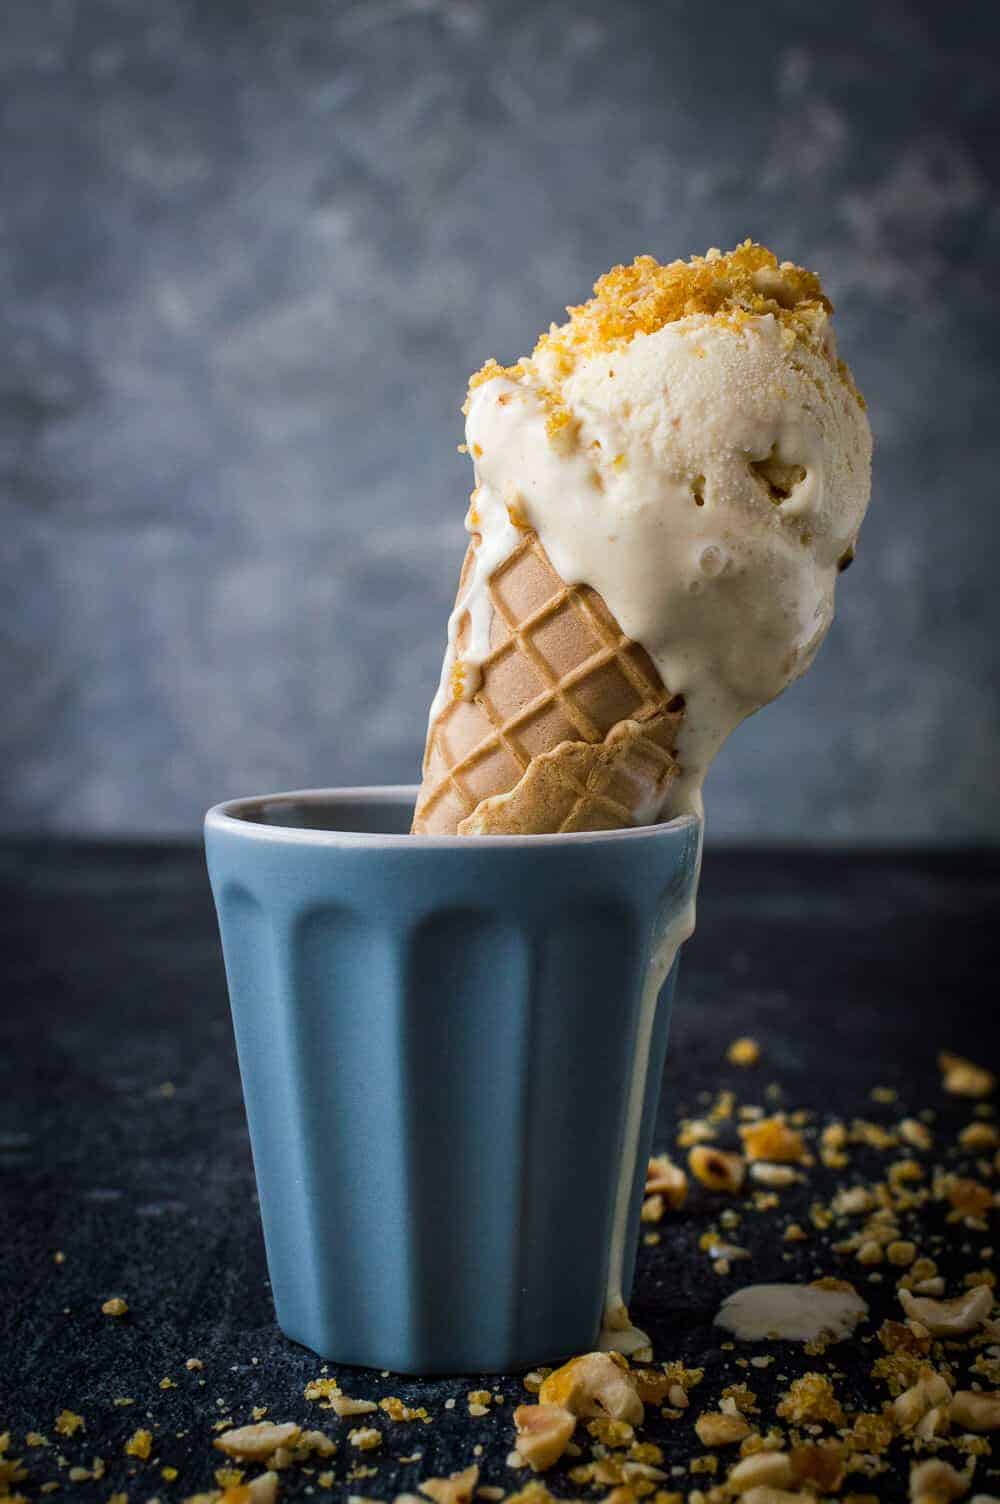 Hazelnut praline ice cream - rich and creamy vanilla ice cream filled with pieces of delectable hazelnut praline. Delicious all year round!